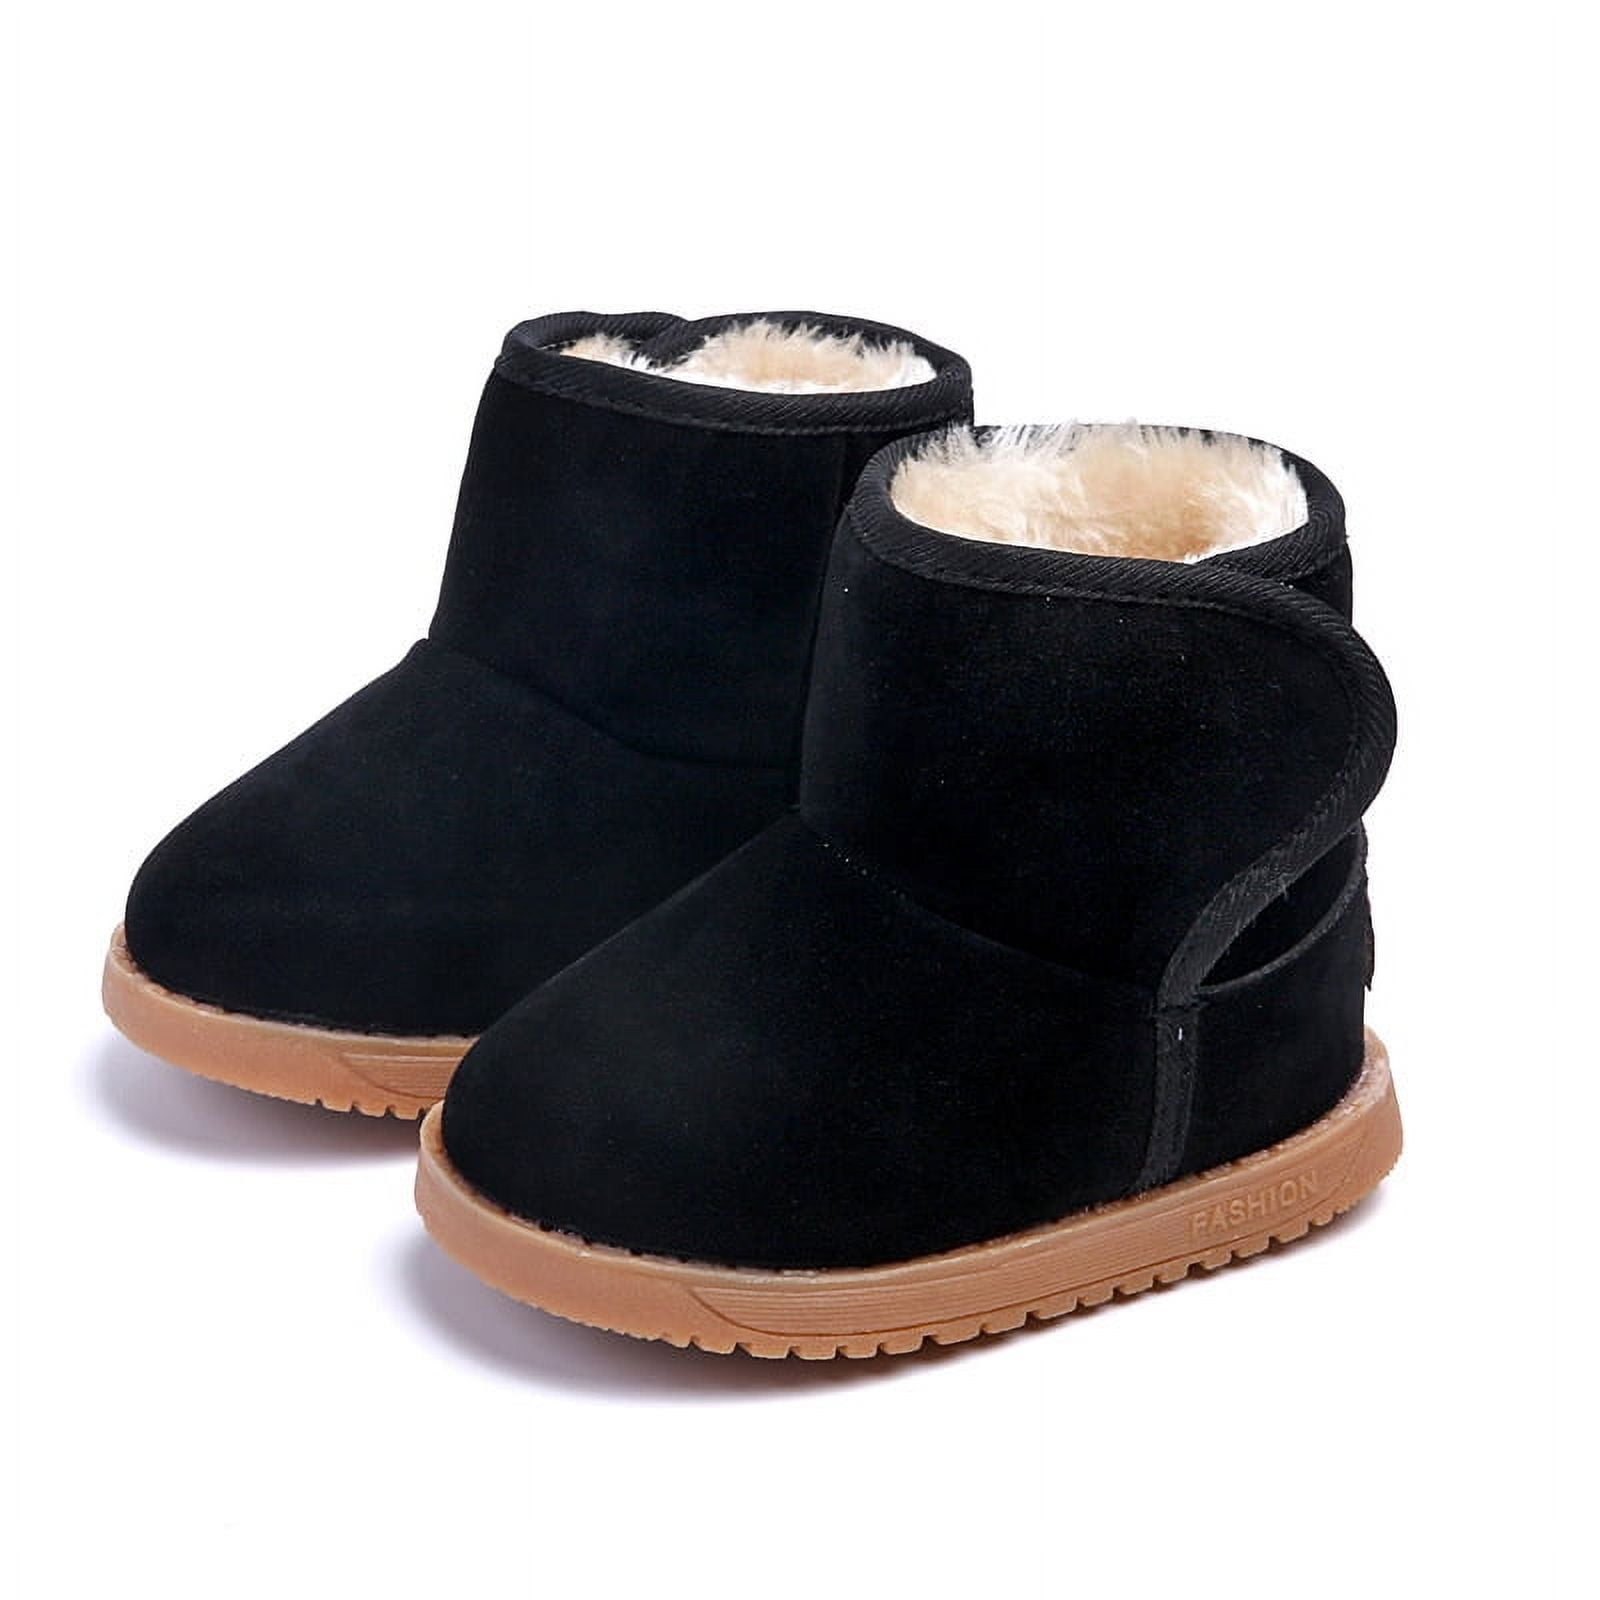 PatPat Toddler Girls Solid Cotton Snow boots - Walmart.com